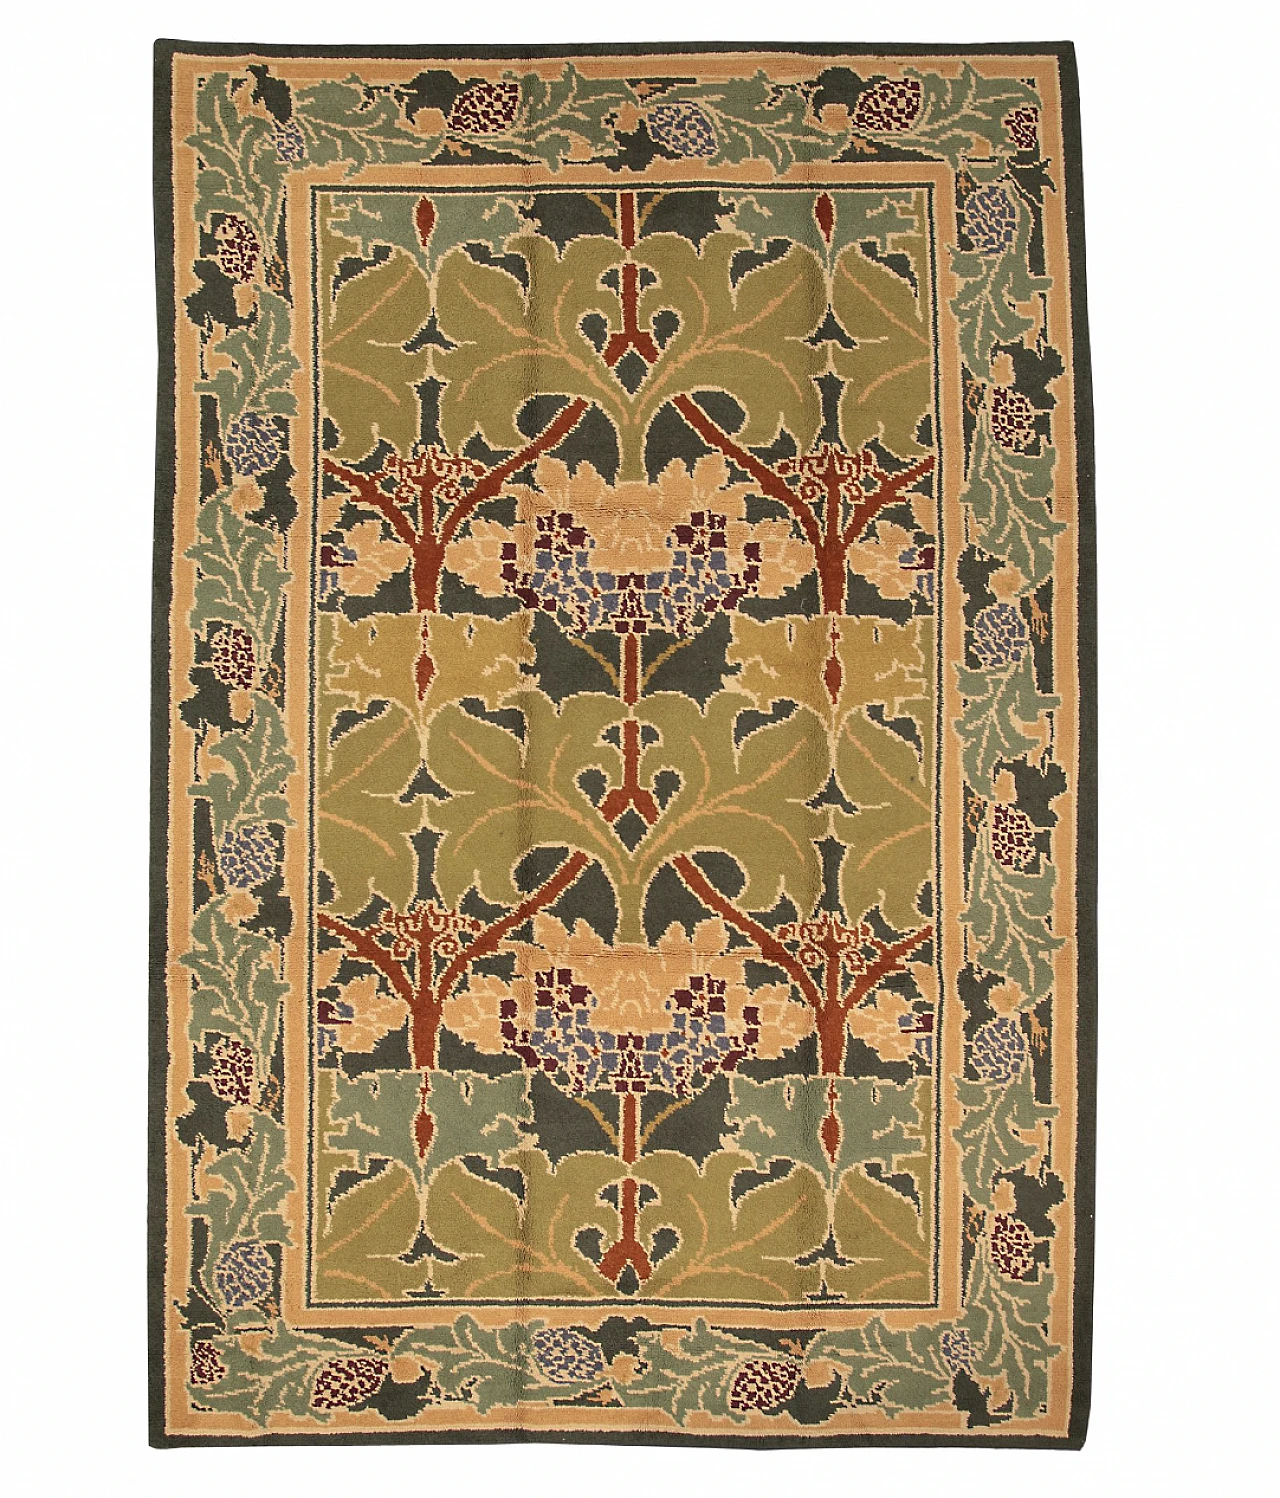 Olive-green wool carpet, 50s 5